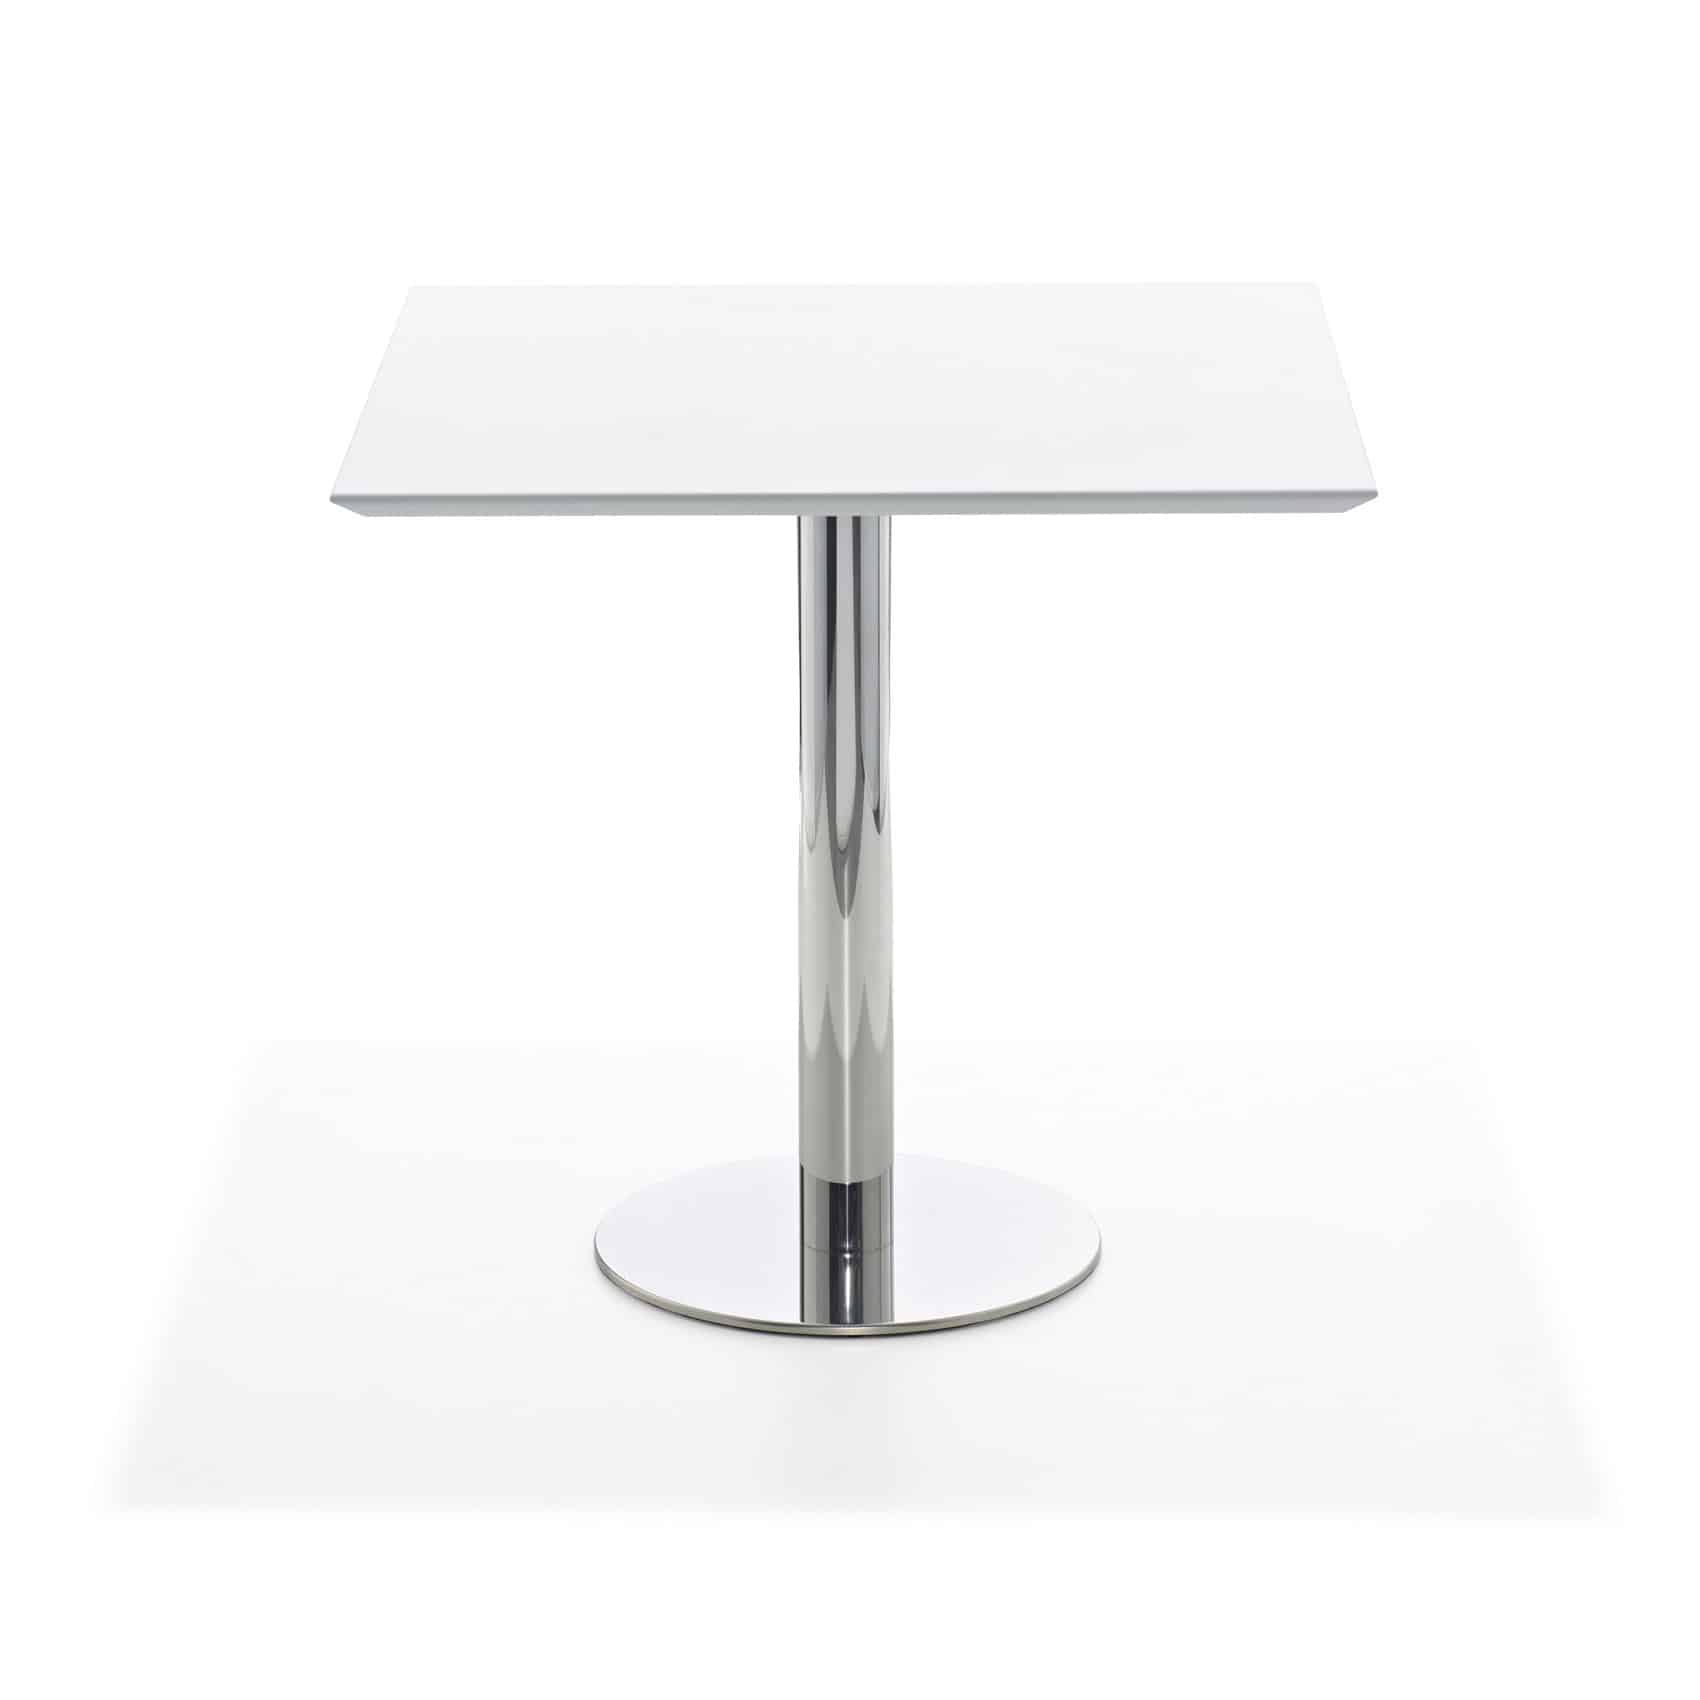 Enzo seating table MDF 79 x 79 cm white